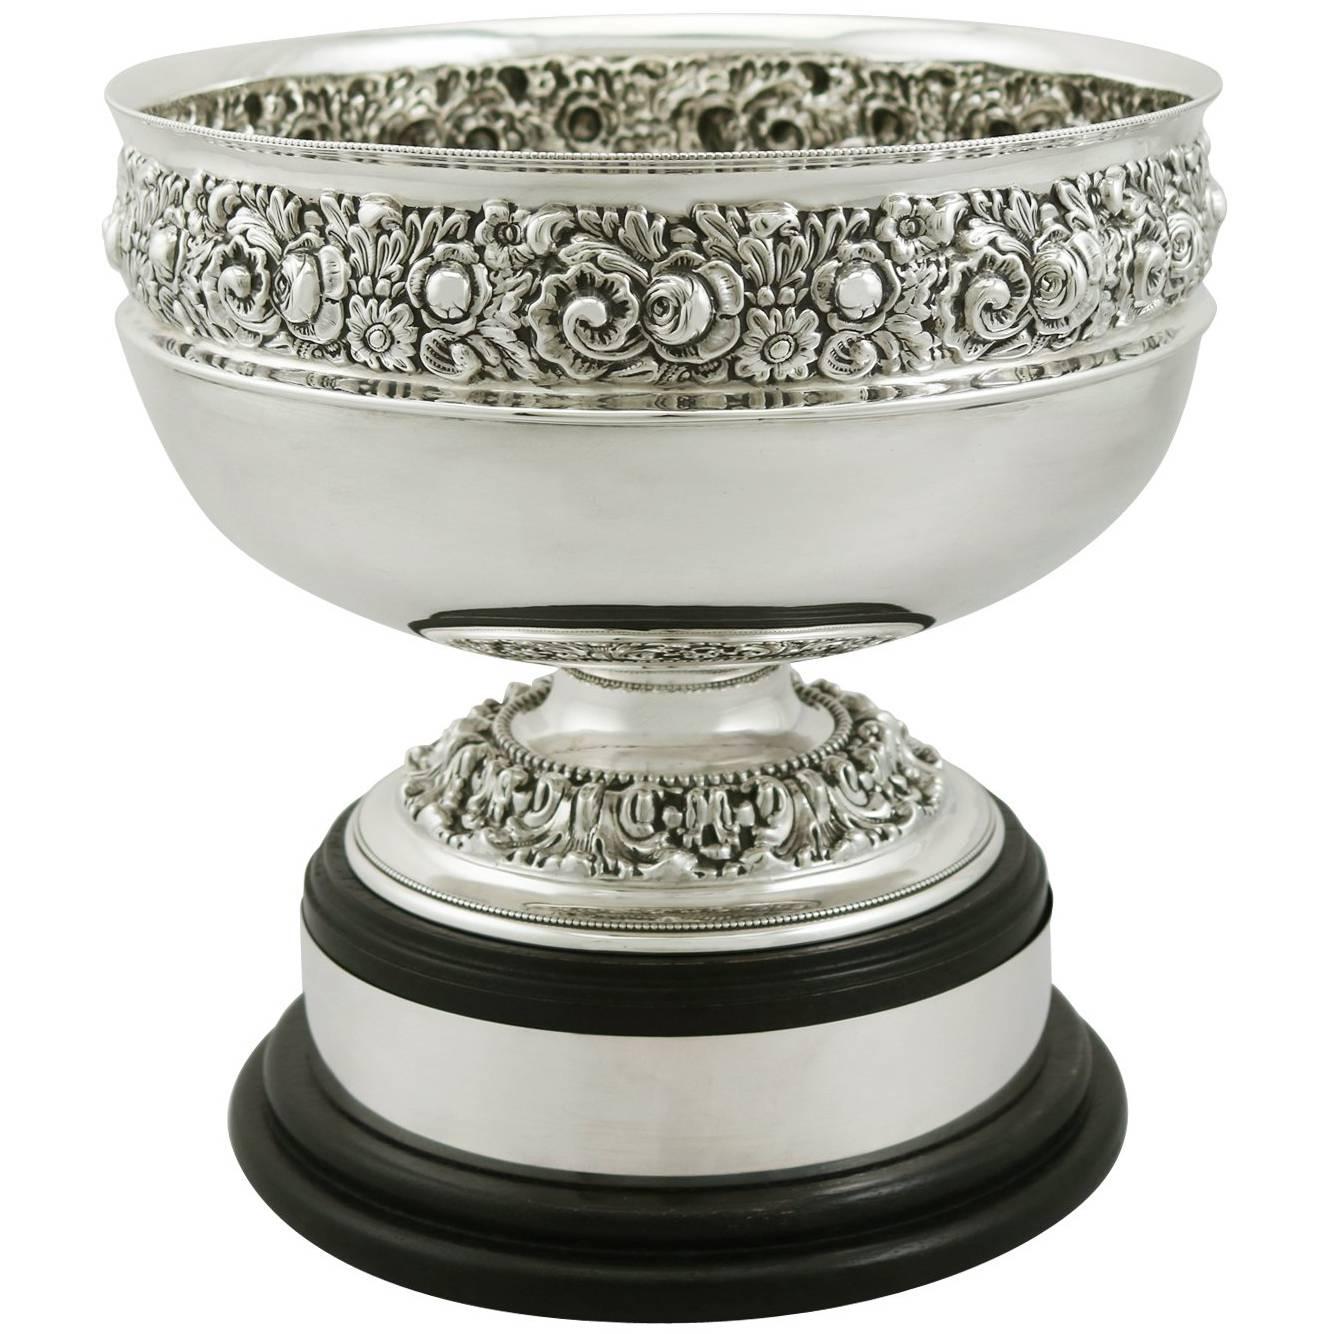 1900s Edwardian Sterling Silver Presentation Bowl